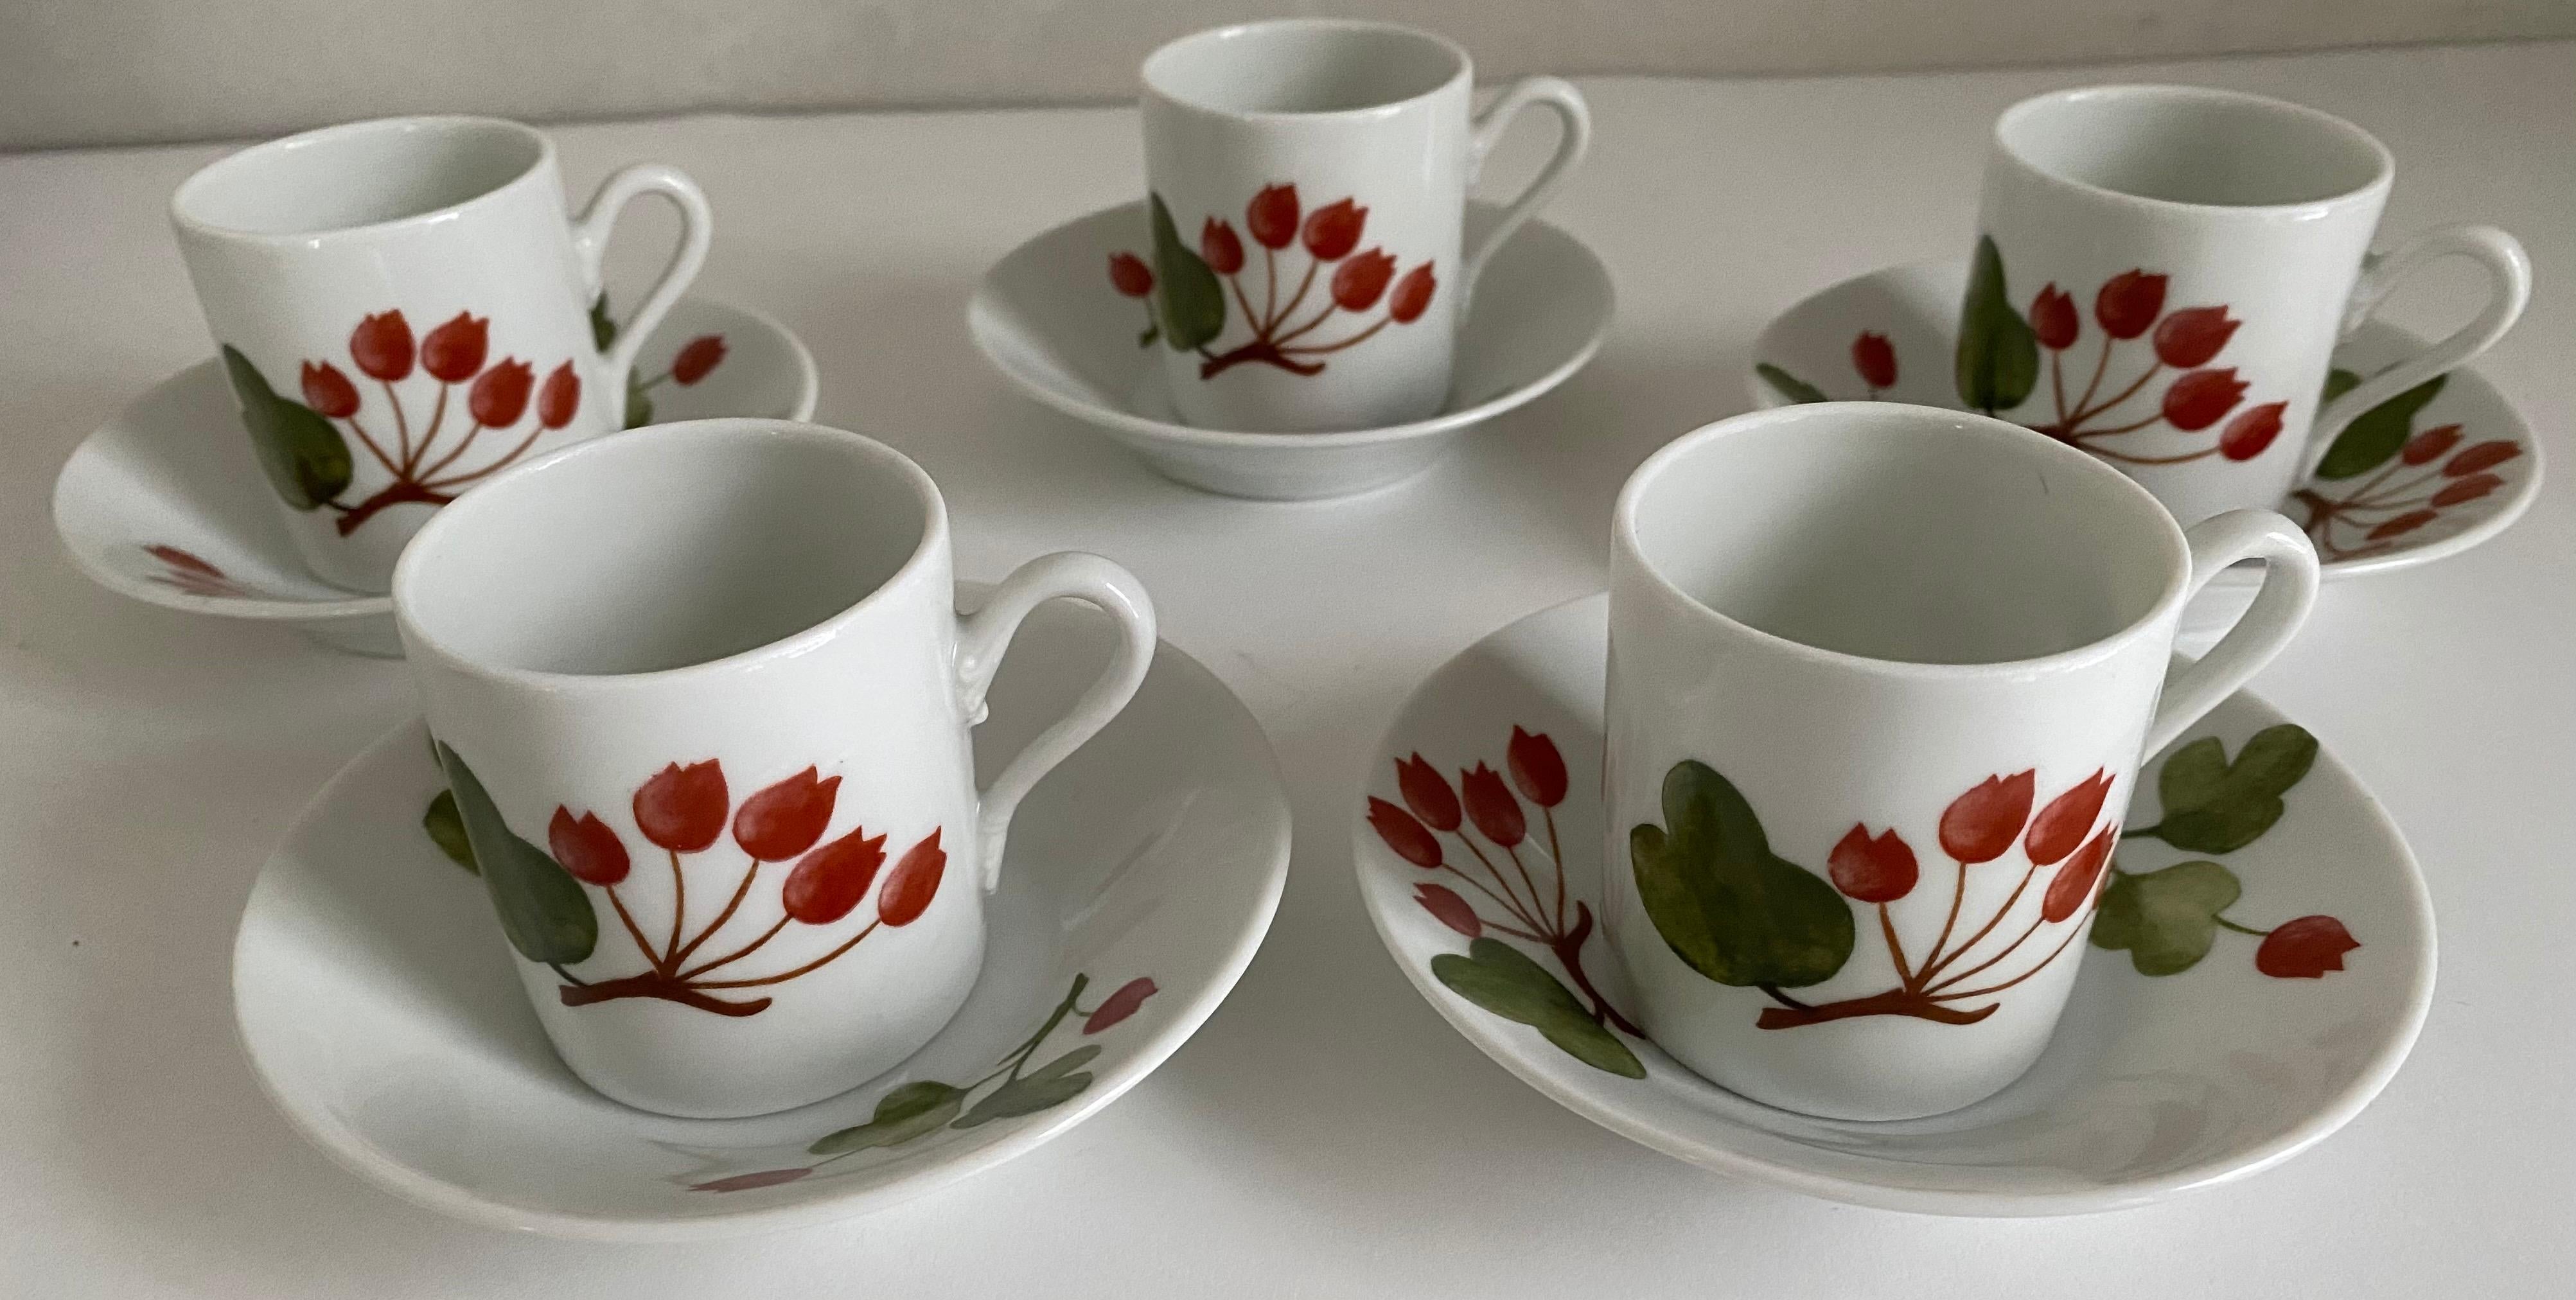 Set of five vintage Richard Ginori porcelain demitasse espresso cups and saucers with floral design. Marked 